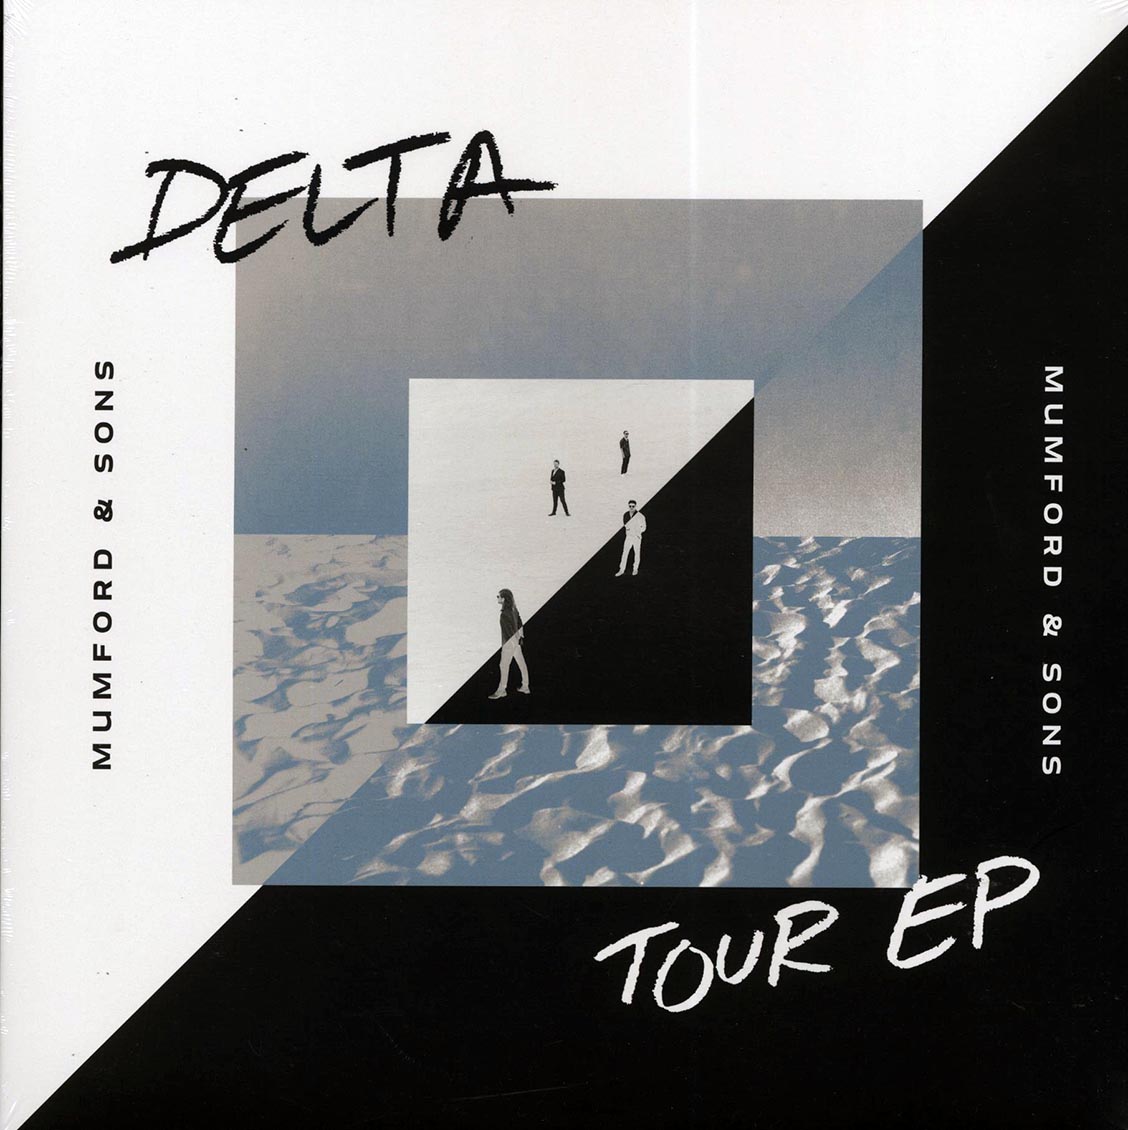 Mumford & Sons - Delta Tour EP